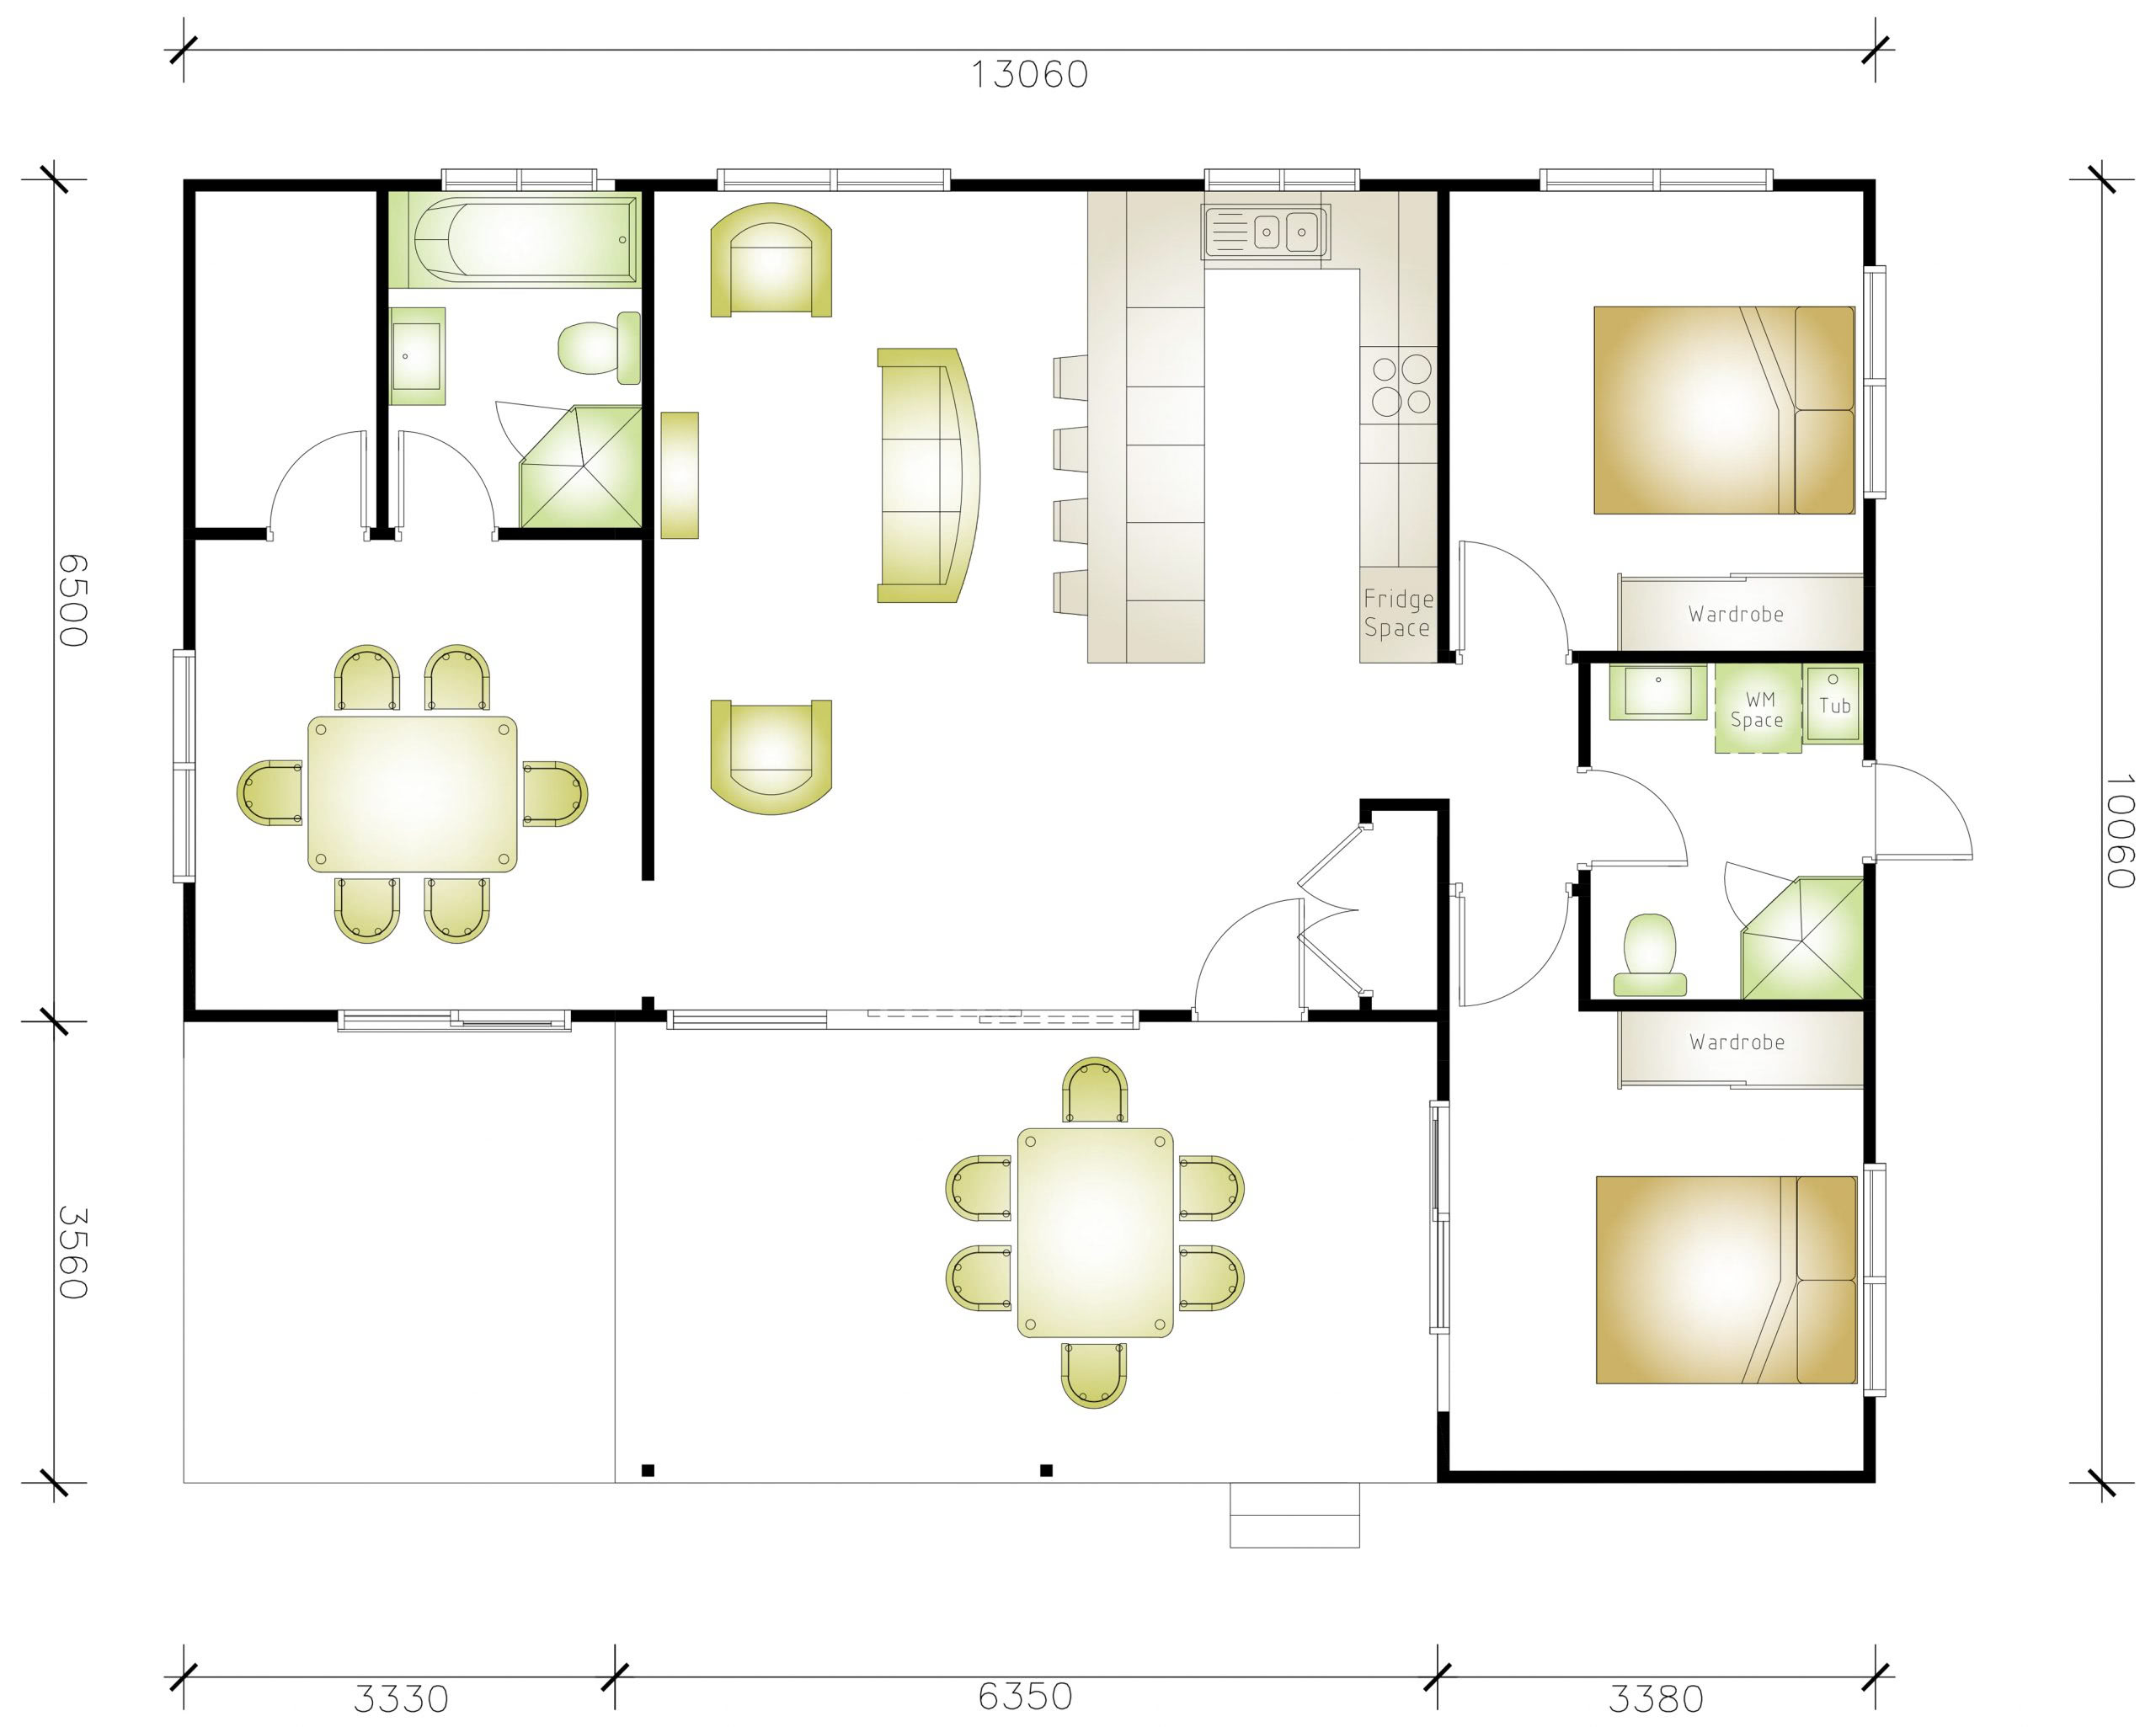 2 bedroom granny flat floor plan with outdoor seating area